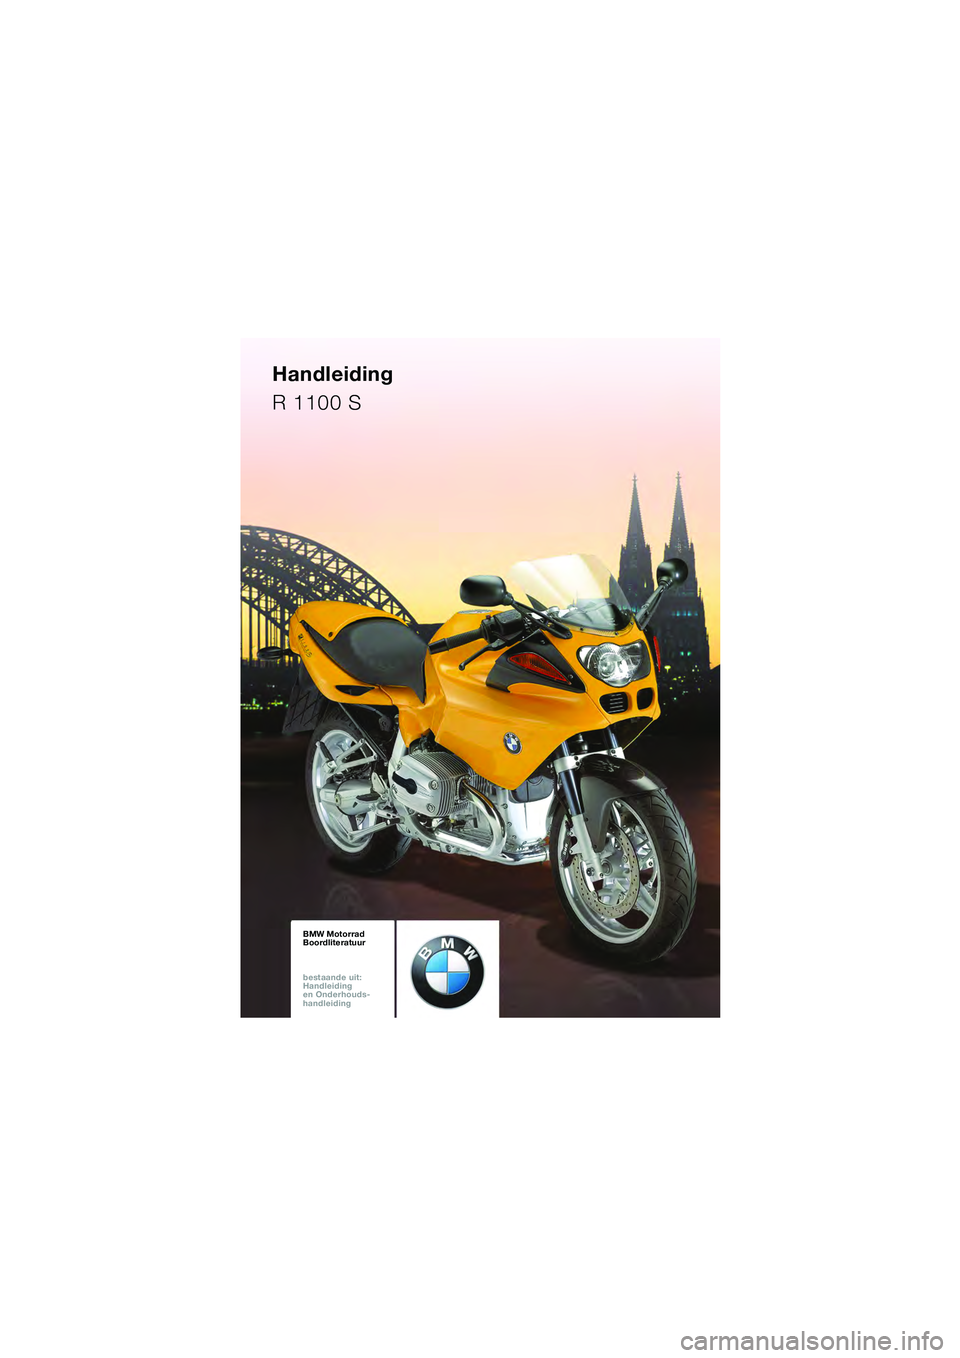 BMW MOTORRAD R 1100 S 2002  Handleiding (in Dutch) BMW Motorrad
Boordliteratuur
bestaande uit:  
Handleiding  
en Onderhouds- 
handleidingBMW Motorrad
Boordliteratuur
bestaande uit:  
Handleiding  
en Onderhouds- 
handleidingBMW Motorrad
Boordliteratu